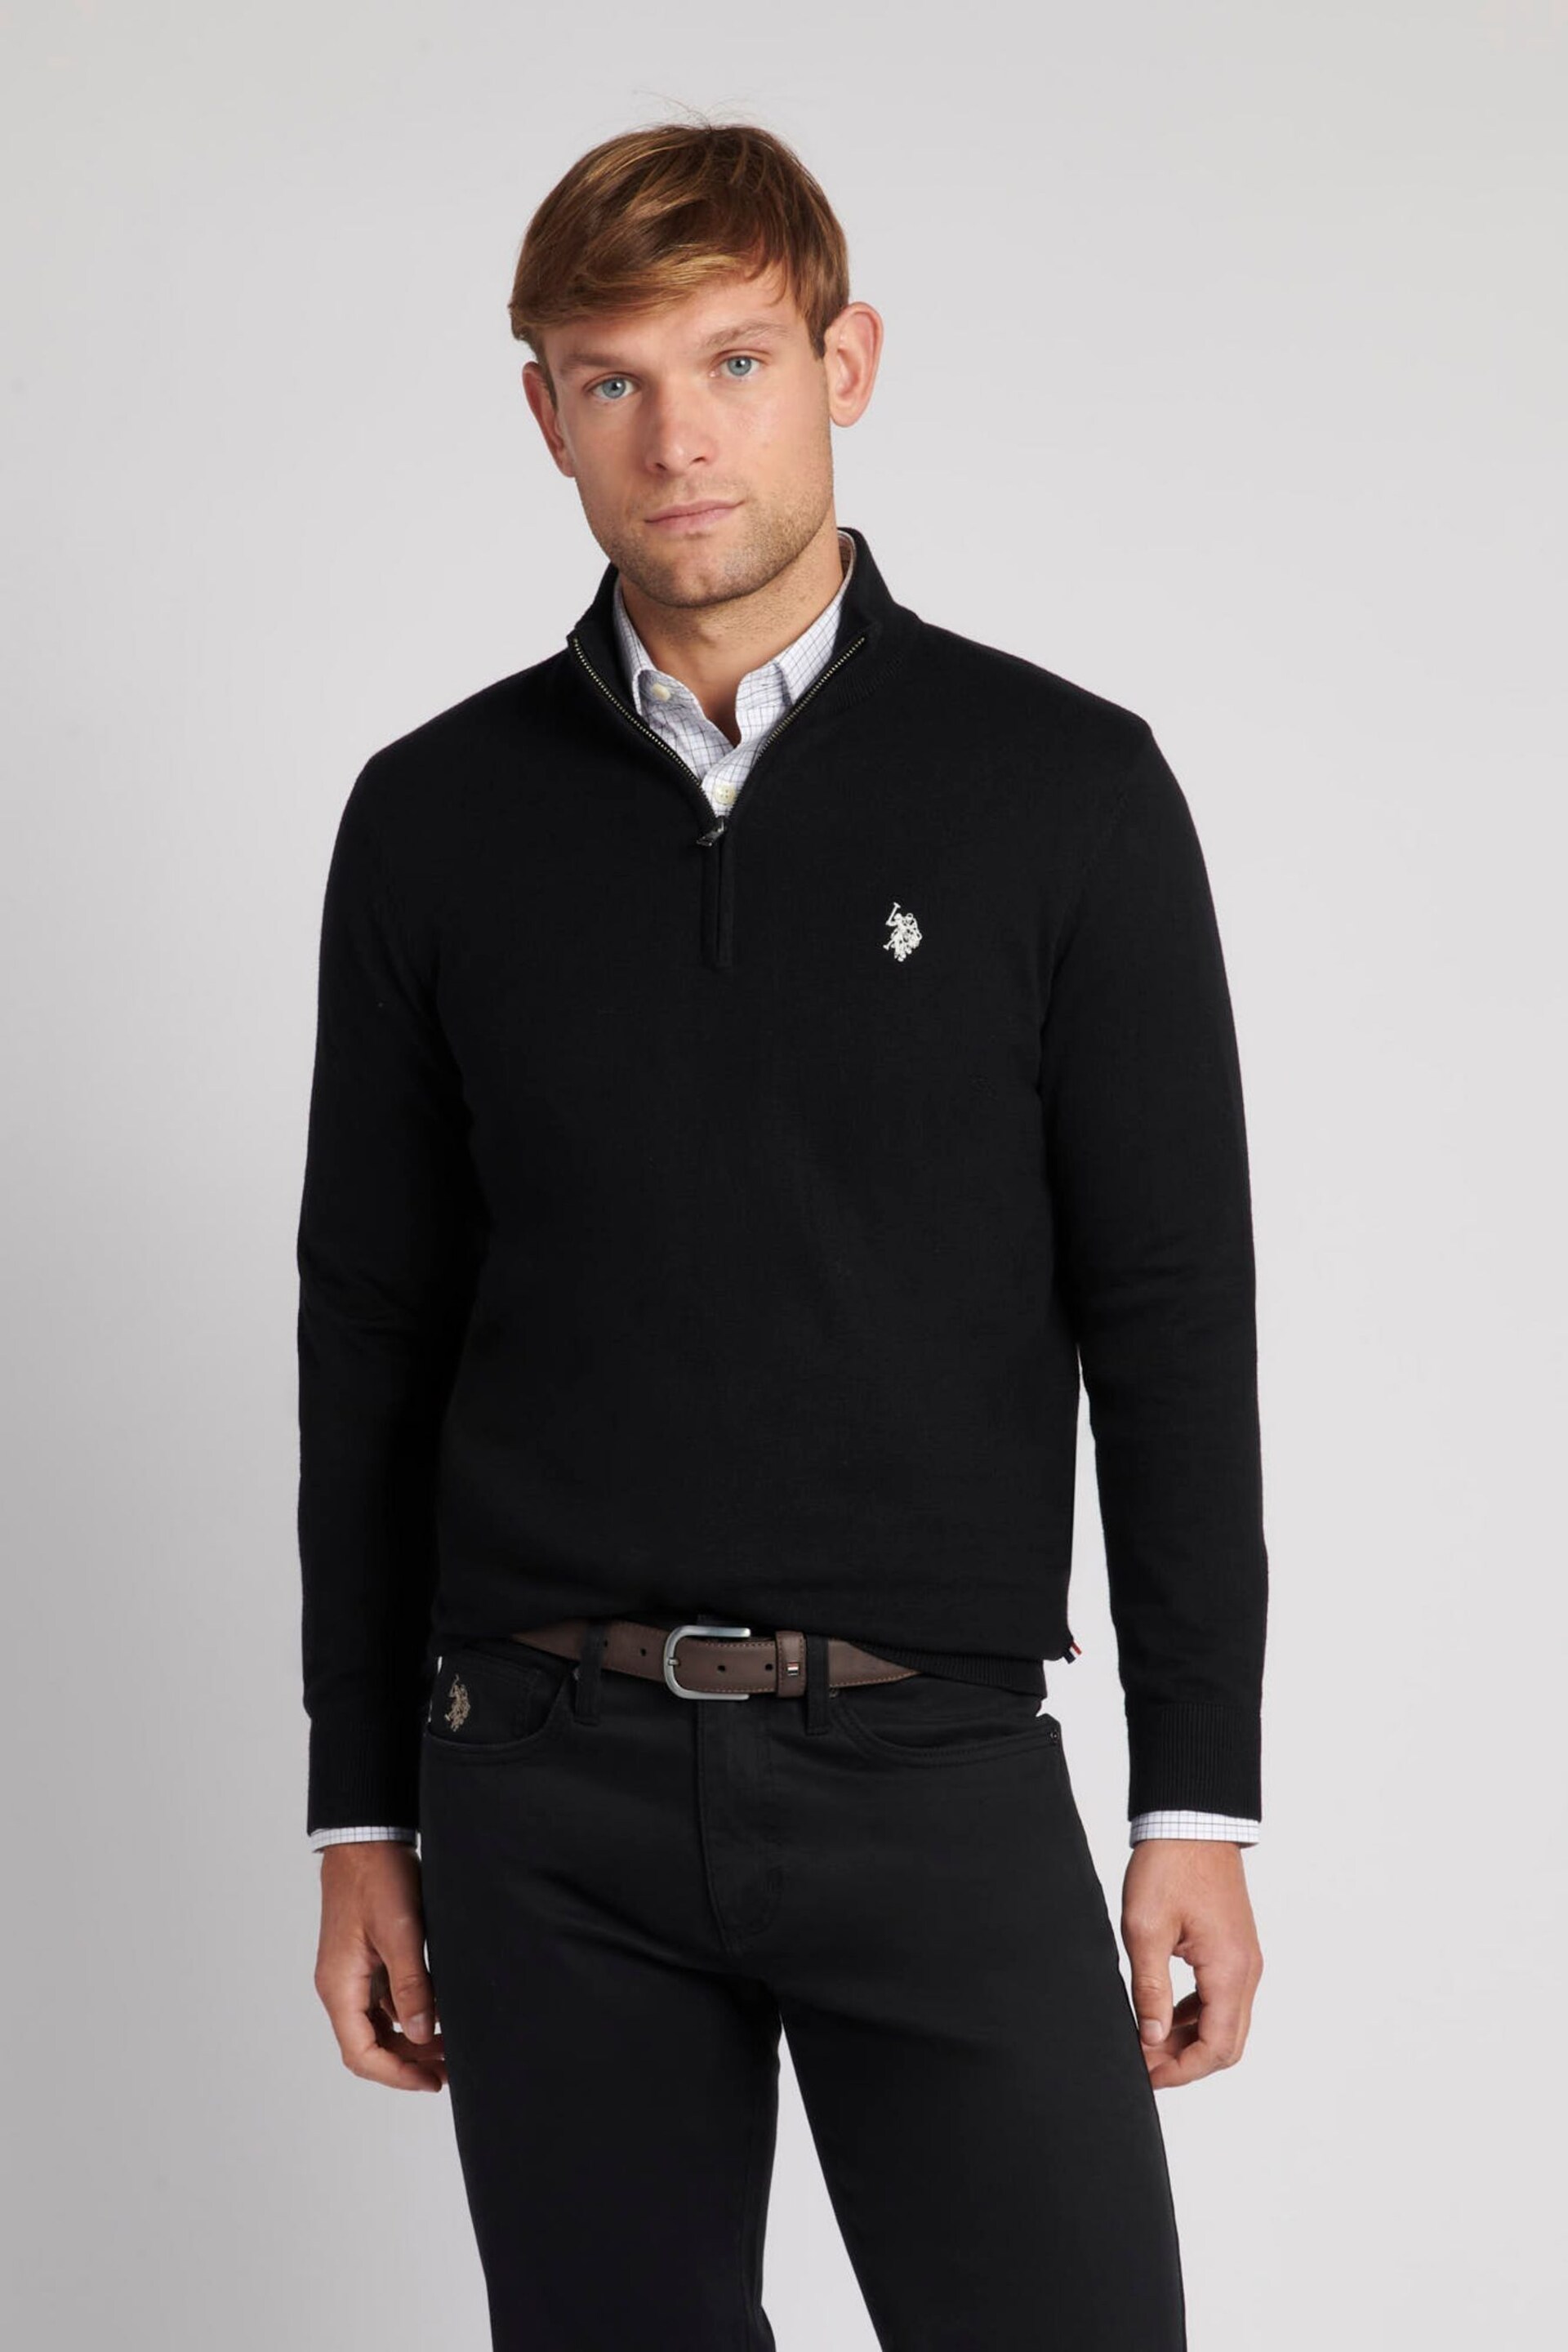 U.S. Polo Assn. Mens Grey Funnel Neck Quarter Zip Knit Sweatshirt - Image 1 of 8